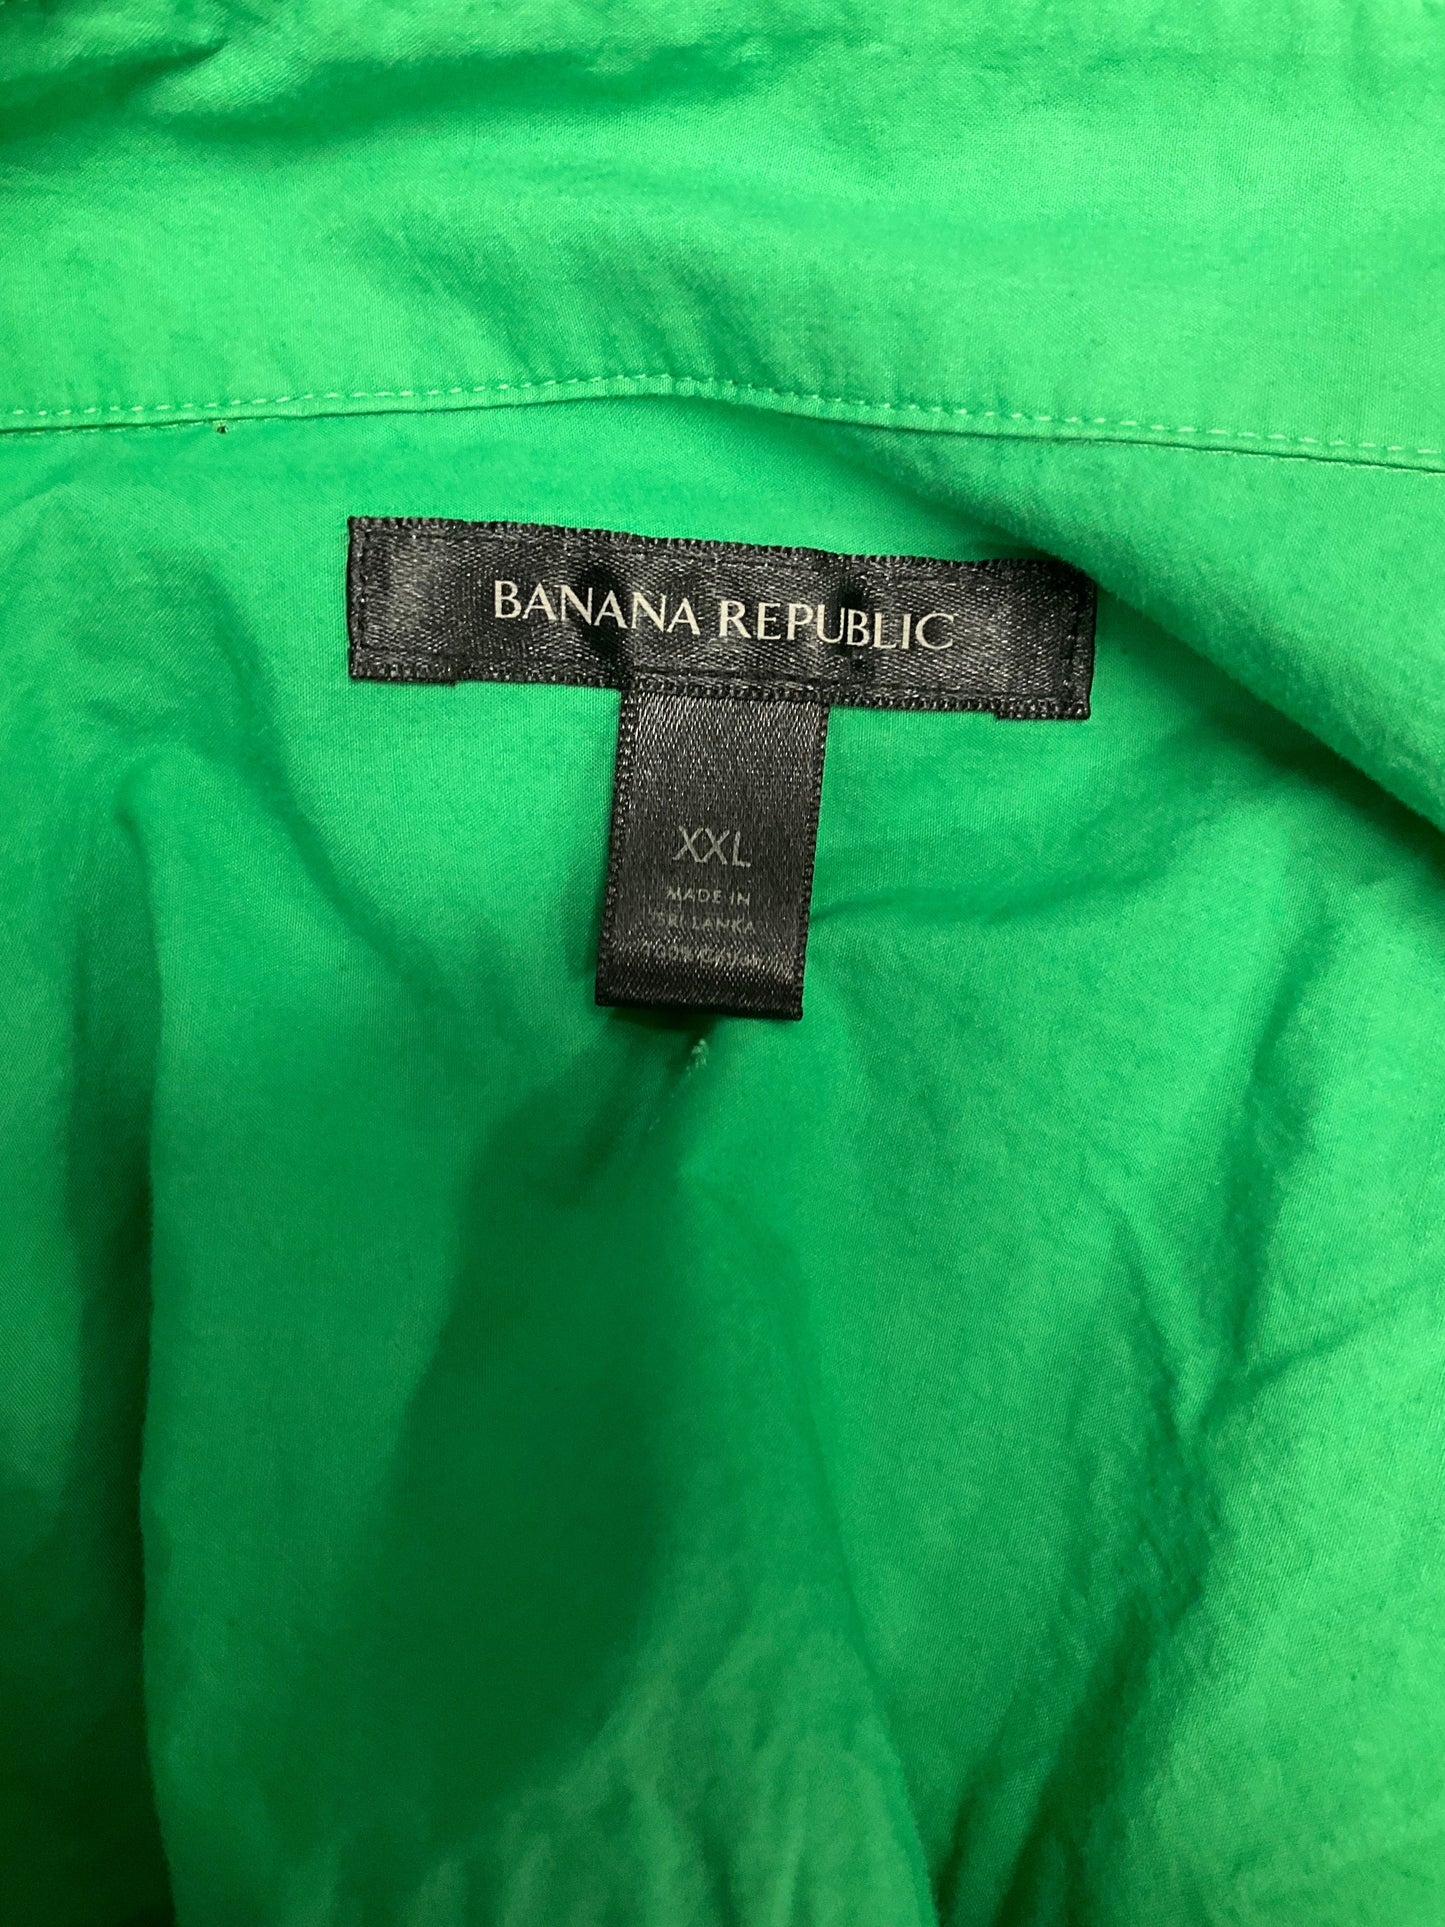 Green Blouse Long Sleeve Banana Republic, Size Xxl